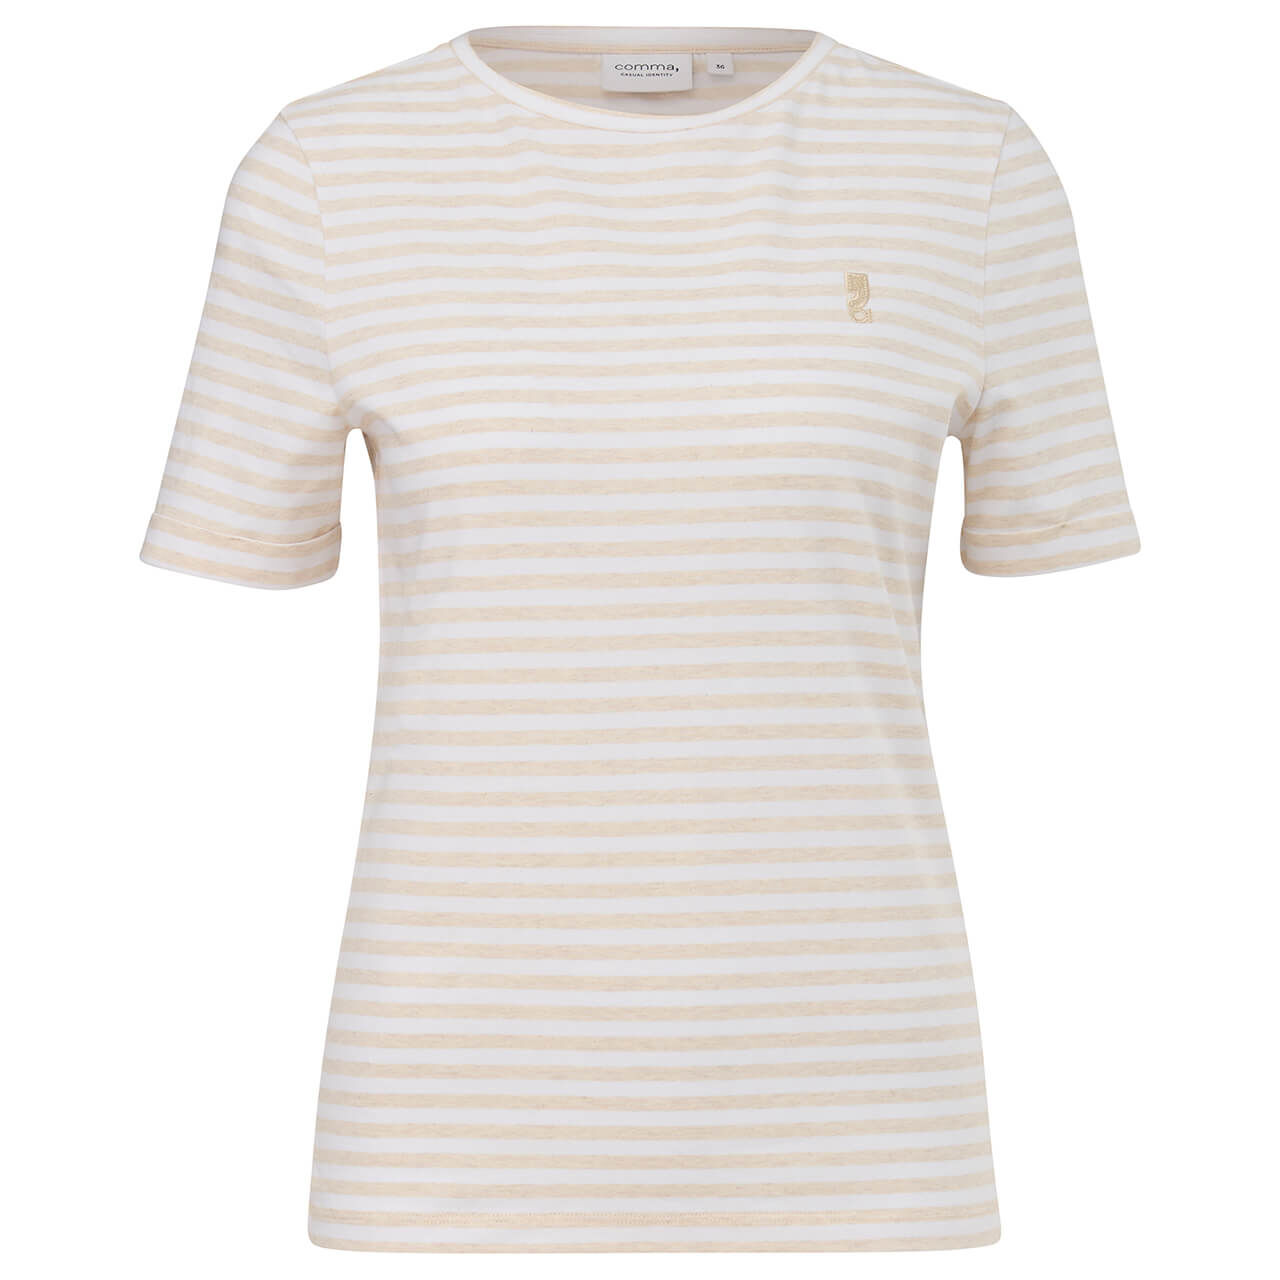 Comma Damen T-Shirt cream stripes